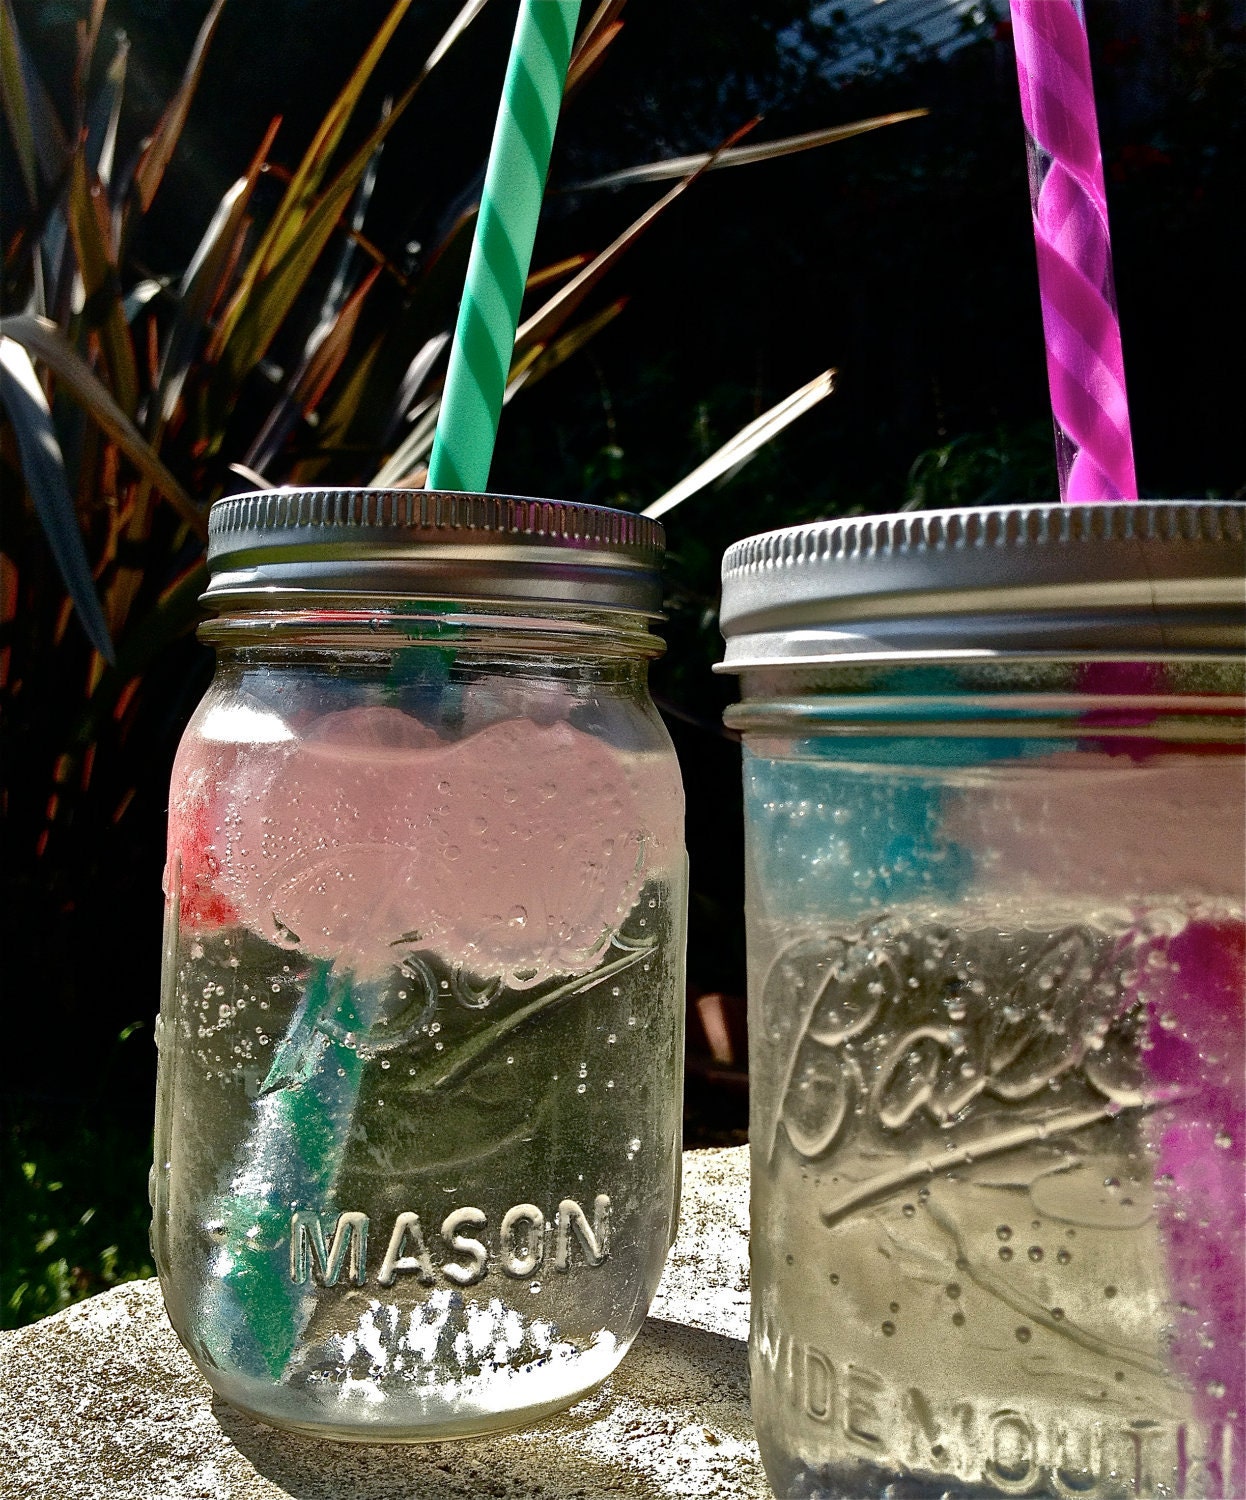 4 Mason Jar Tumbler Lids with Straws - Make your own eco Tumbler - Reusable Glass Tumbler - Mason Jar Lids - Mason Tumbler